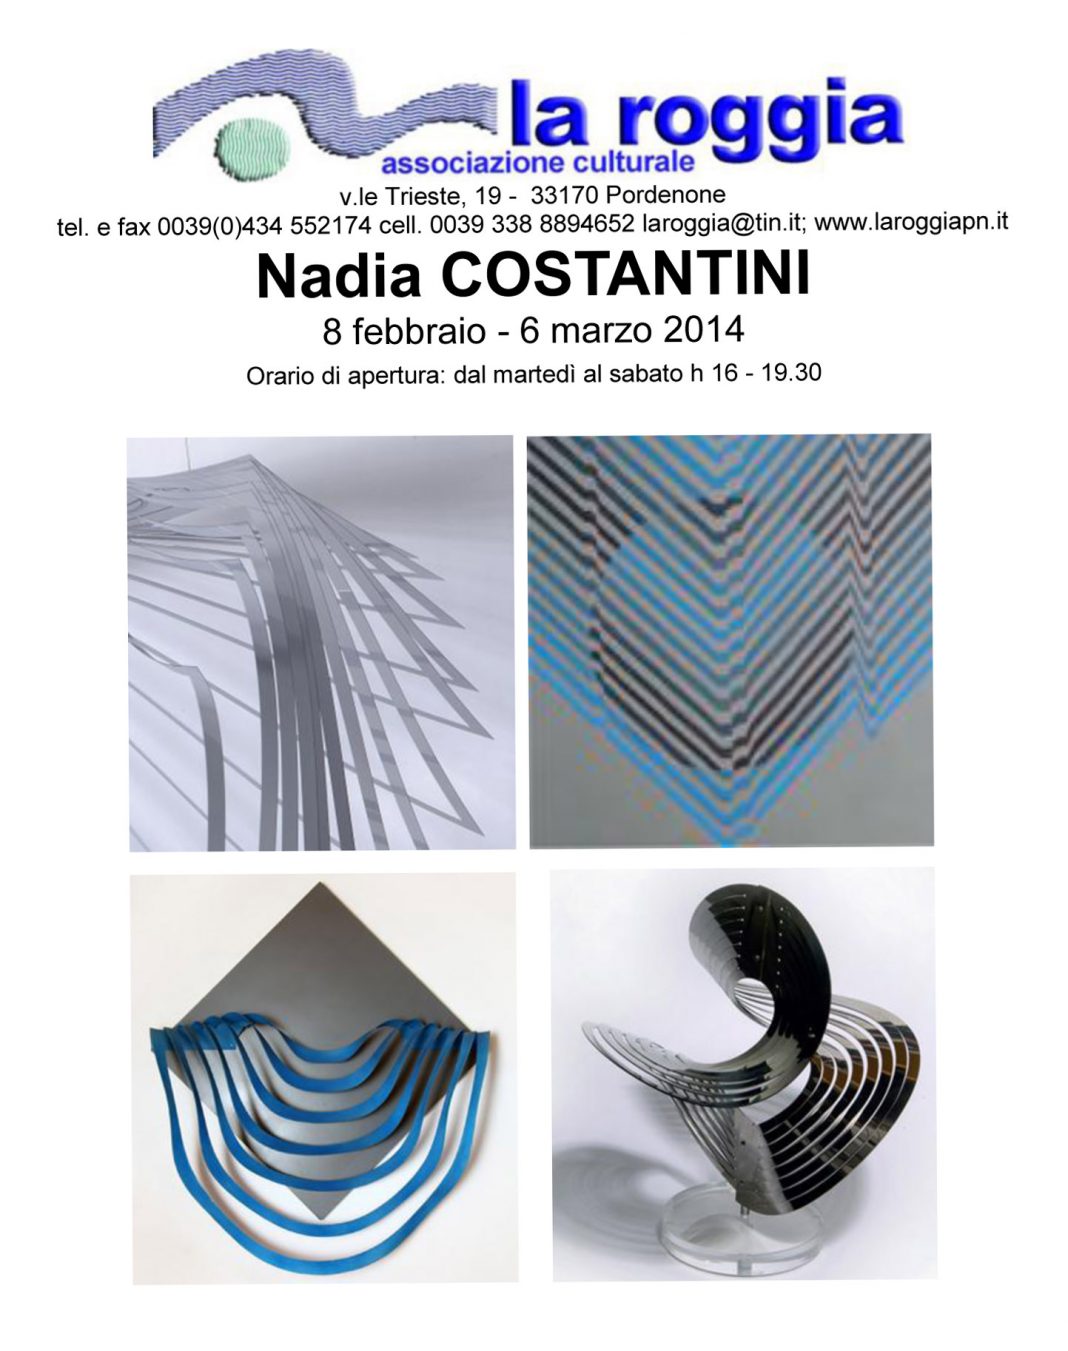 Nadia Costantinihttps://www.exibart.com/repository/media/eventi/2014/01/nadia-costantini-1068x1351.jpg